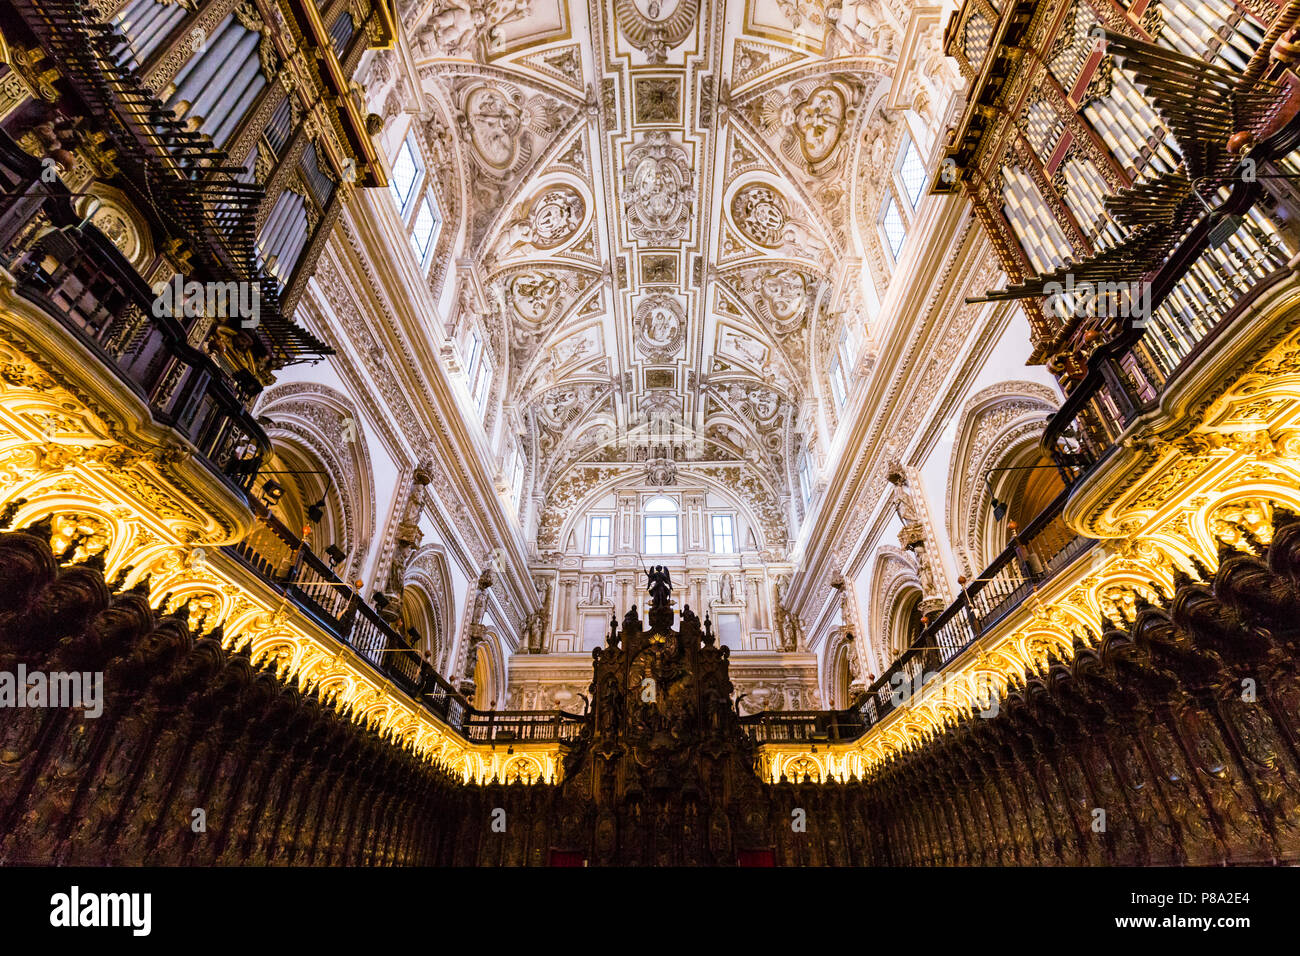 La Capilla Mayor, the Cathedral inside the Mezquita, Cordoba, Spain Stock Photo